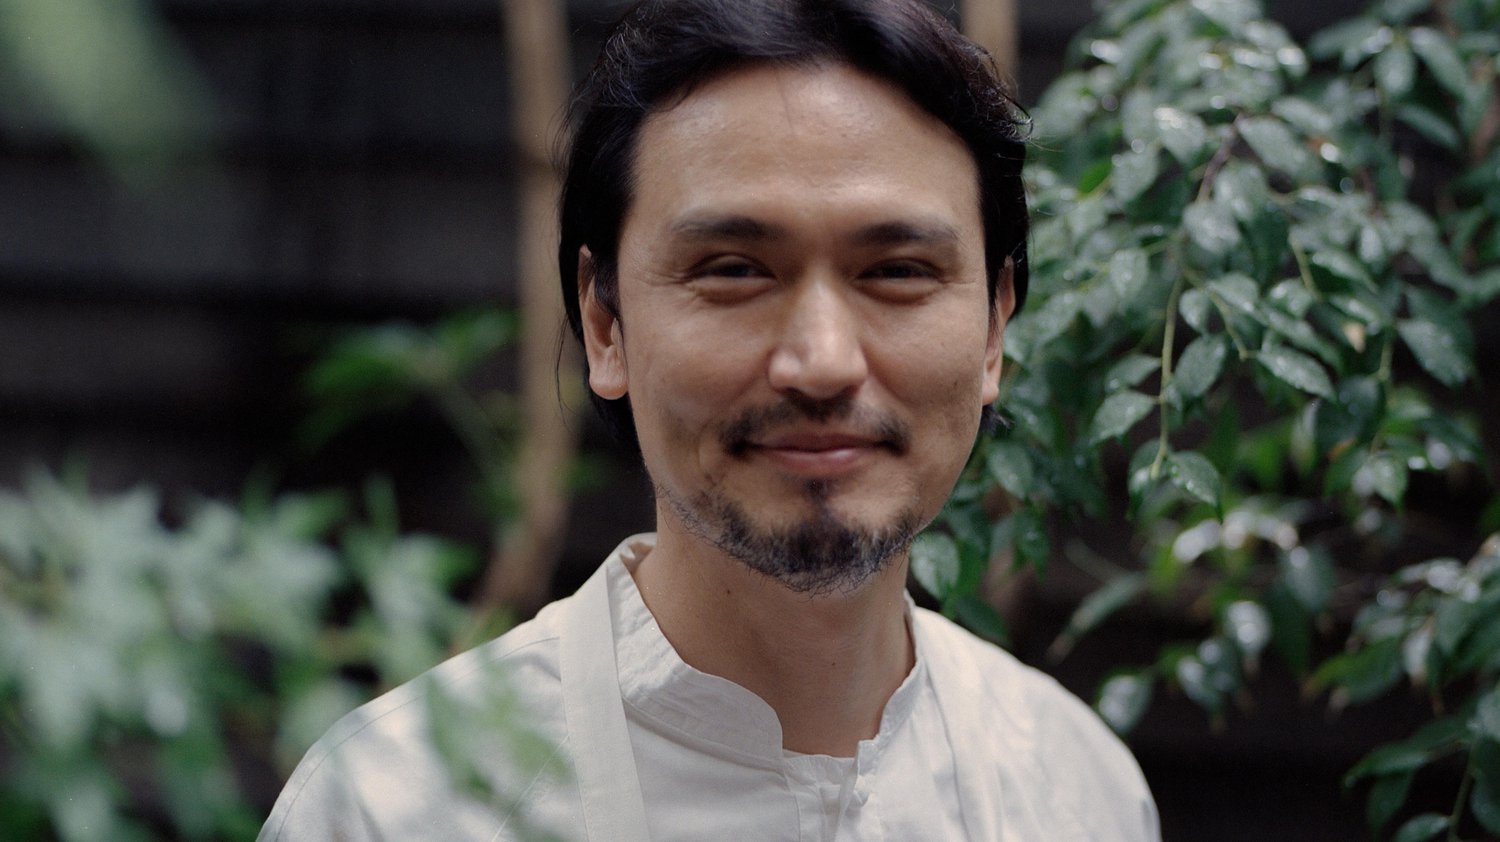 Chef Shinobu Namae (taken by Nathalie Cantacuzino).JPG